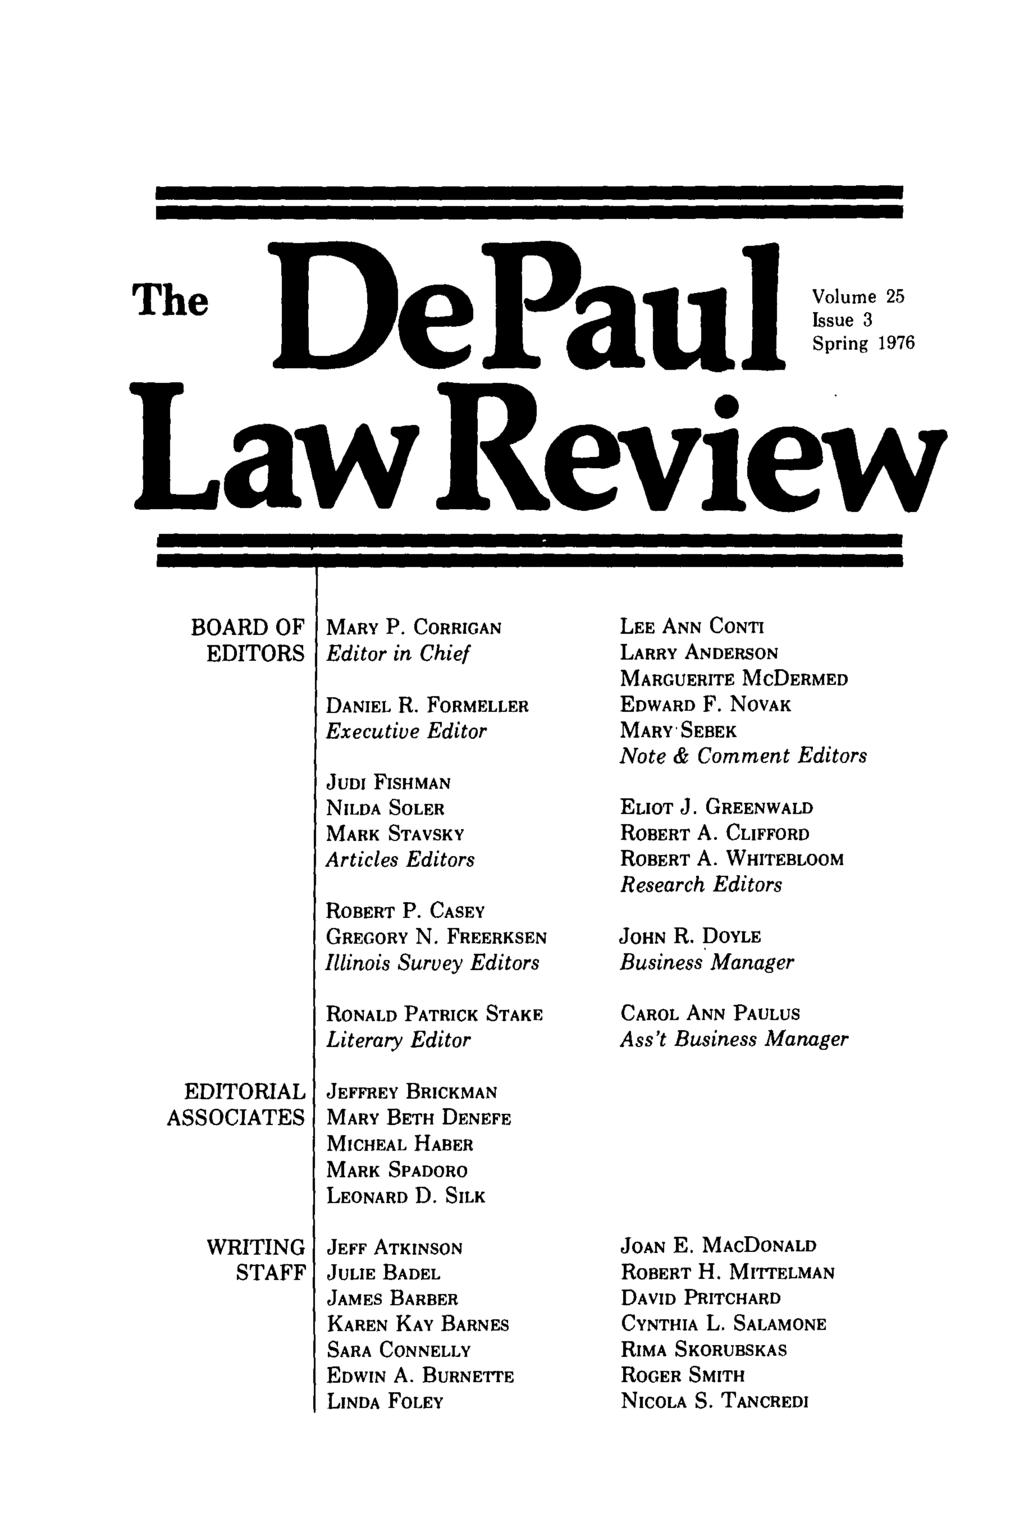 The DePaVolume 25 Issue Spring 1976 Law Review BOARD OF MARY P. CORRIGAN EDITORS Editor in Chief DANIEL R. FORMELLER Executive Editor JUDI FISHMAN NILDA SOLER MARK STAVSKY Articles Editors ROBERT P.